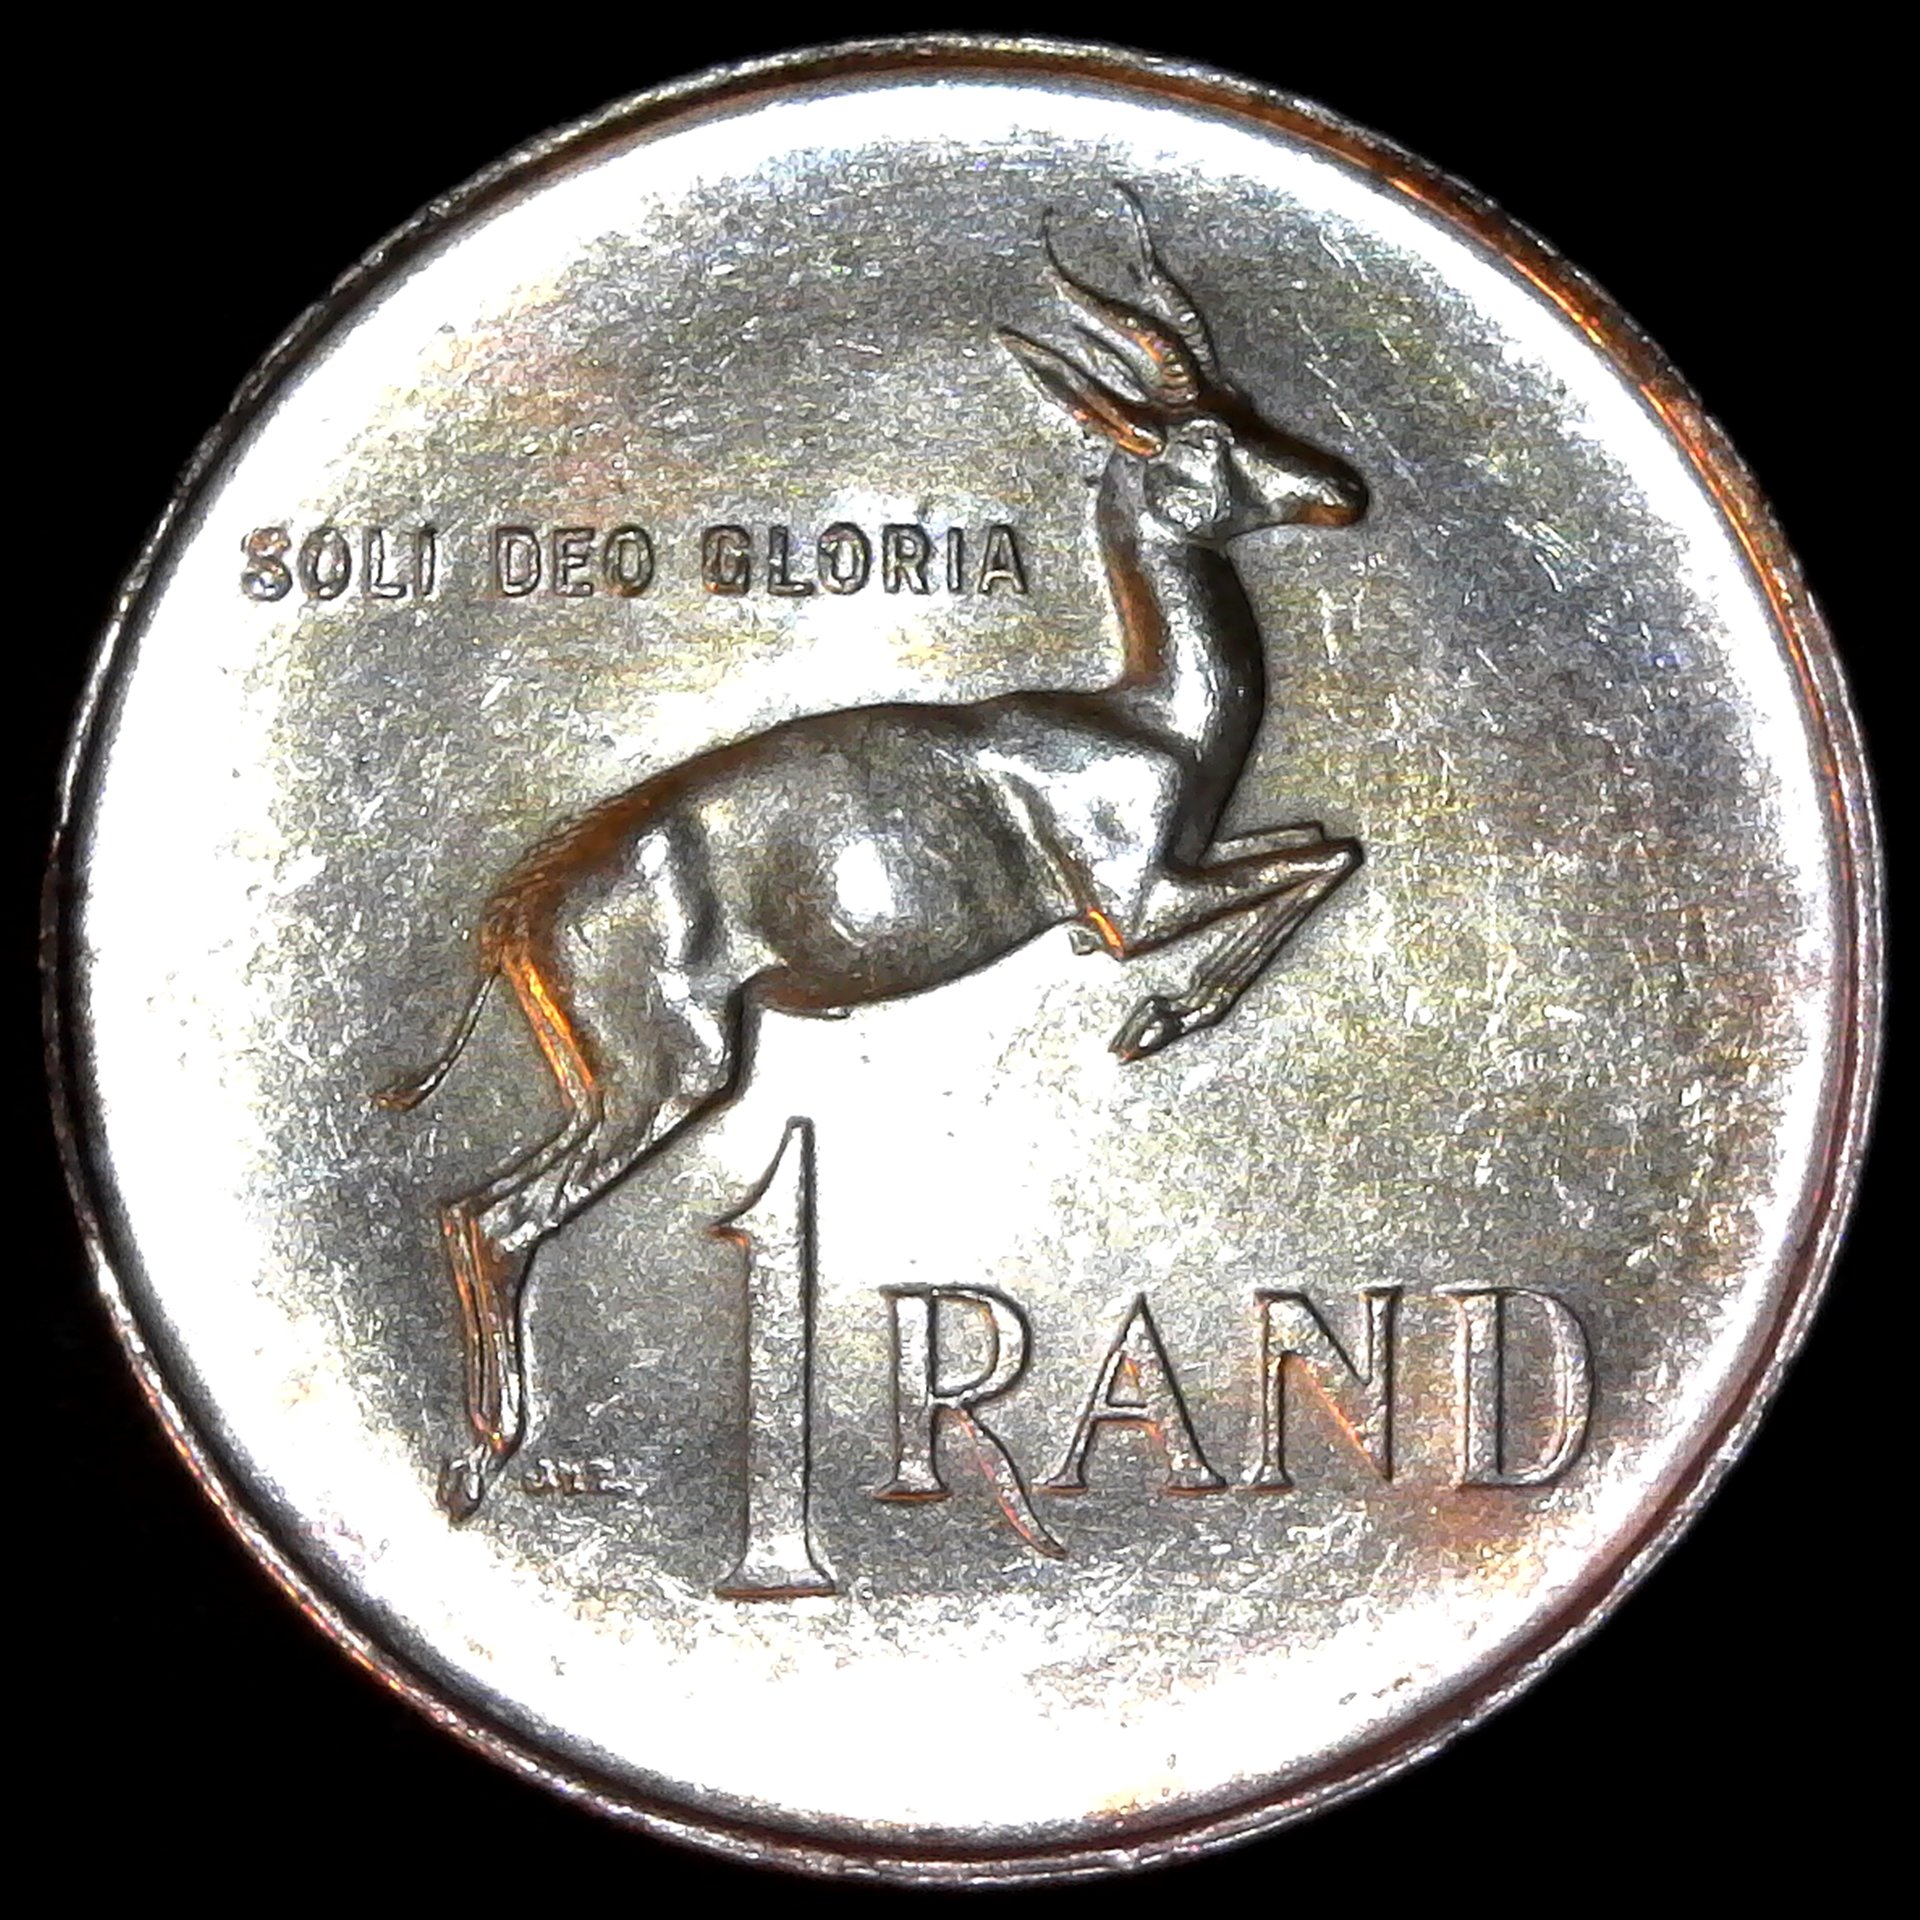 South Africa Rand 1966 rev.jpg